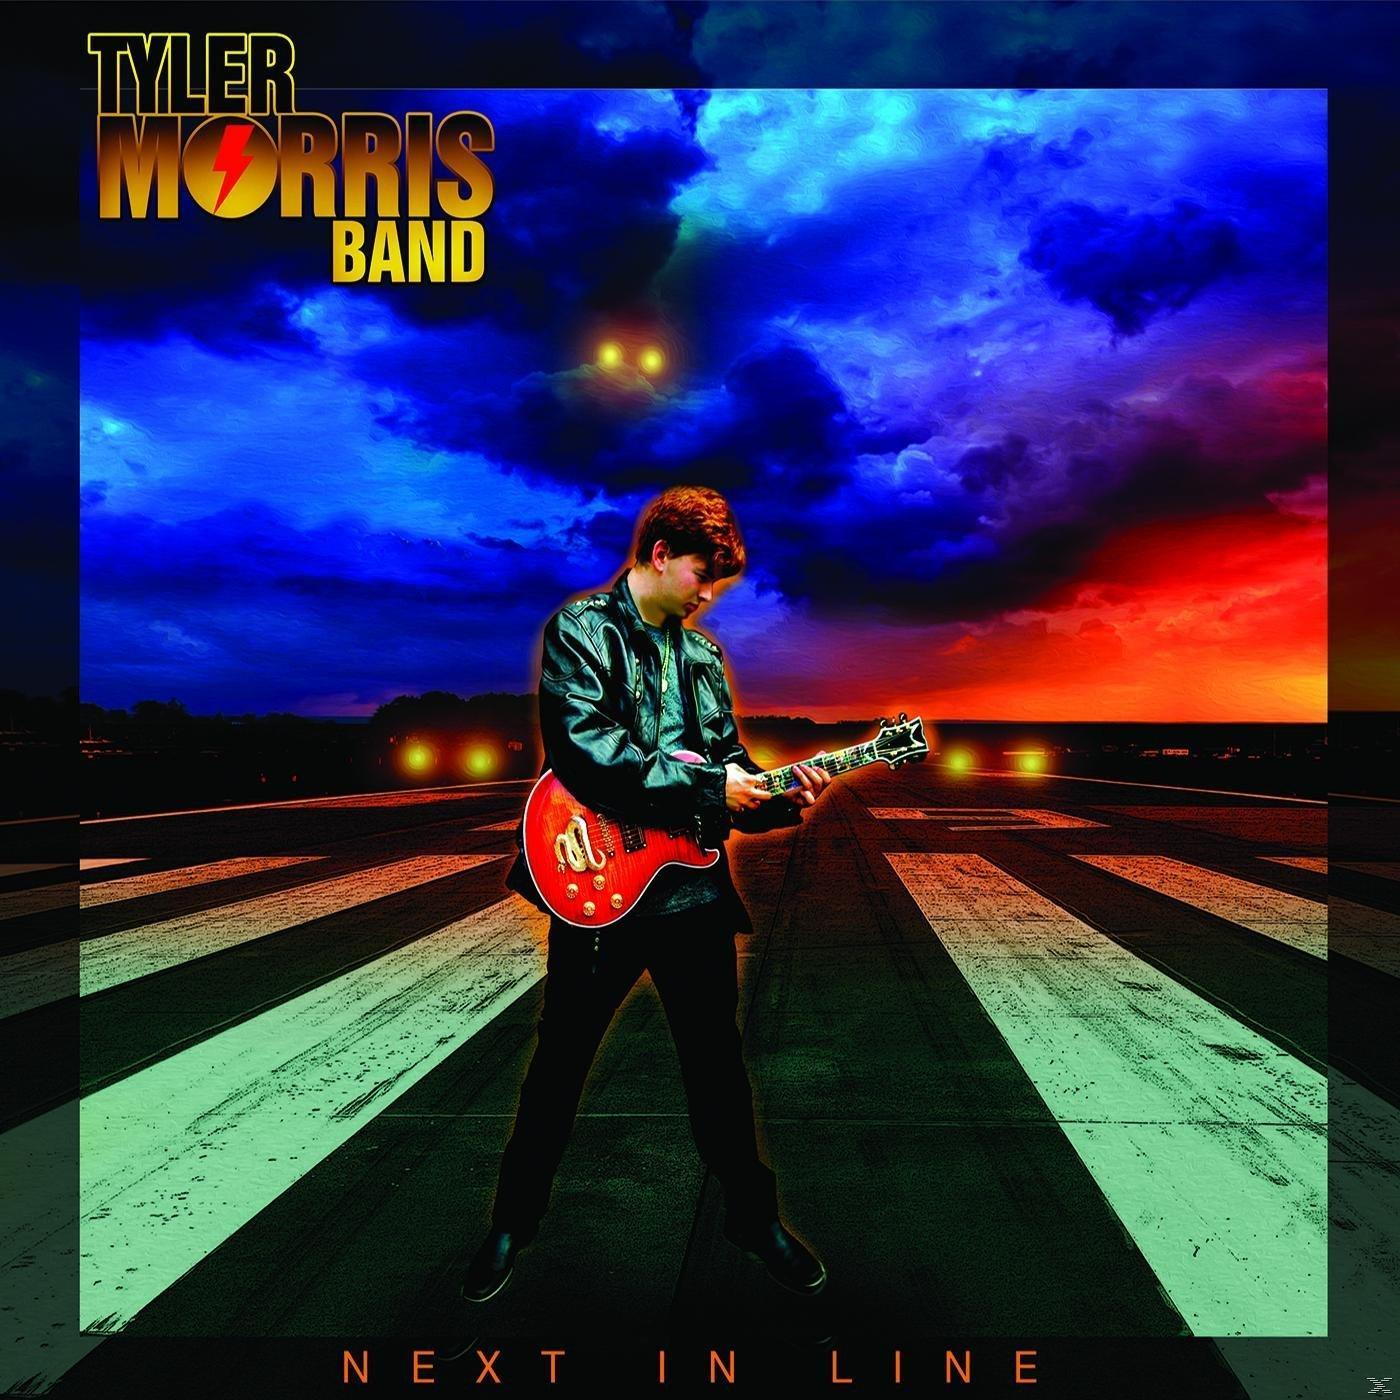 Tyler -band- Morris - Next (Vinyl) In - Line